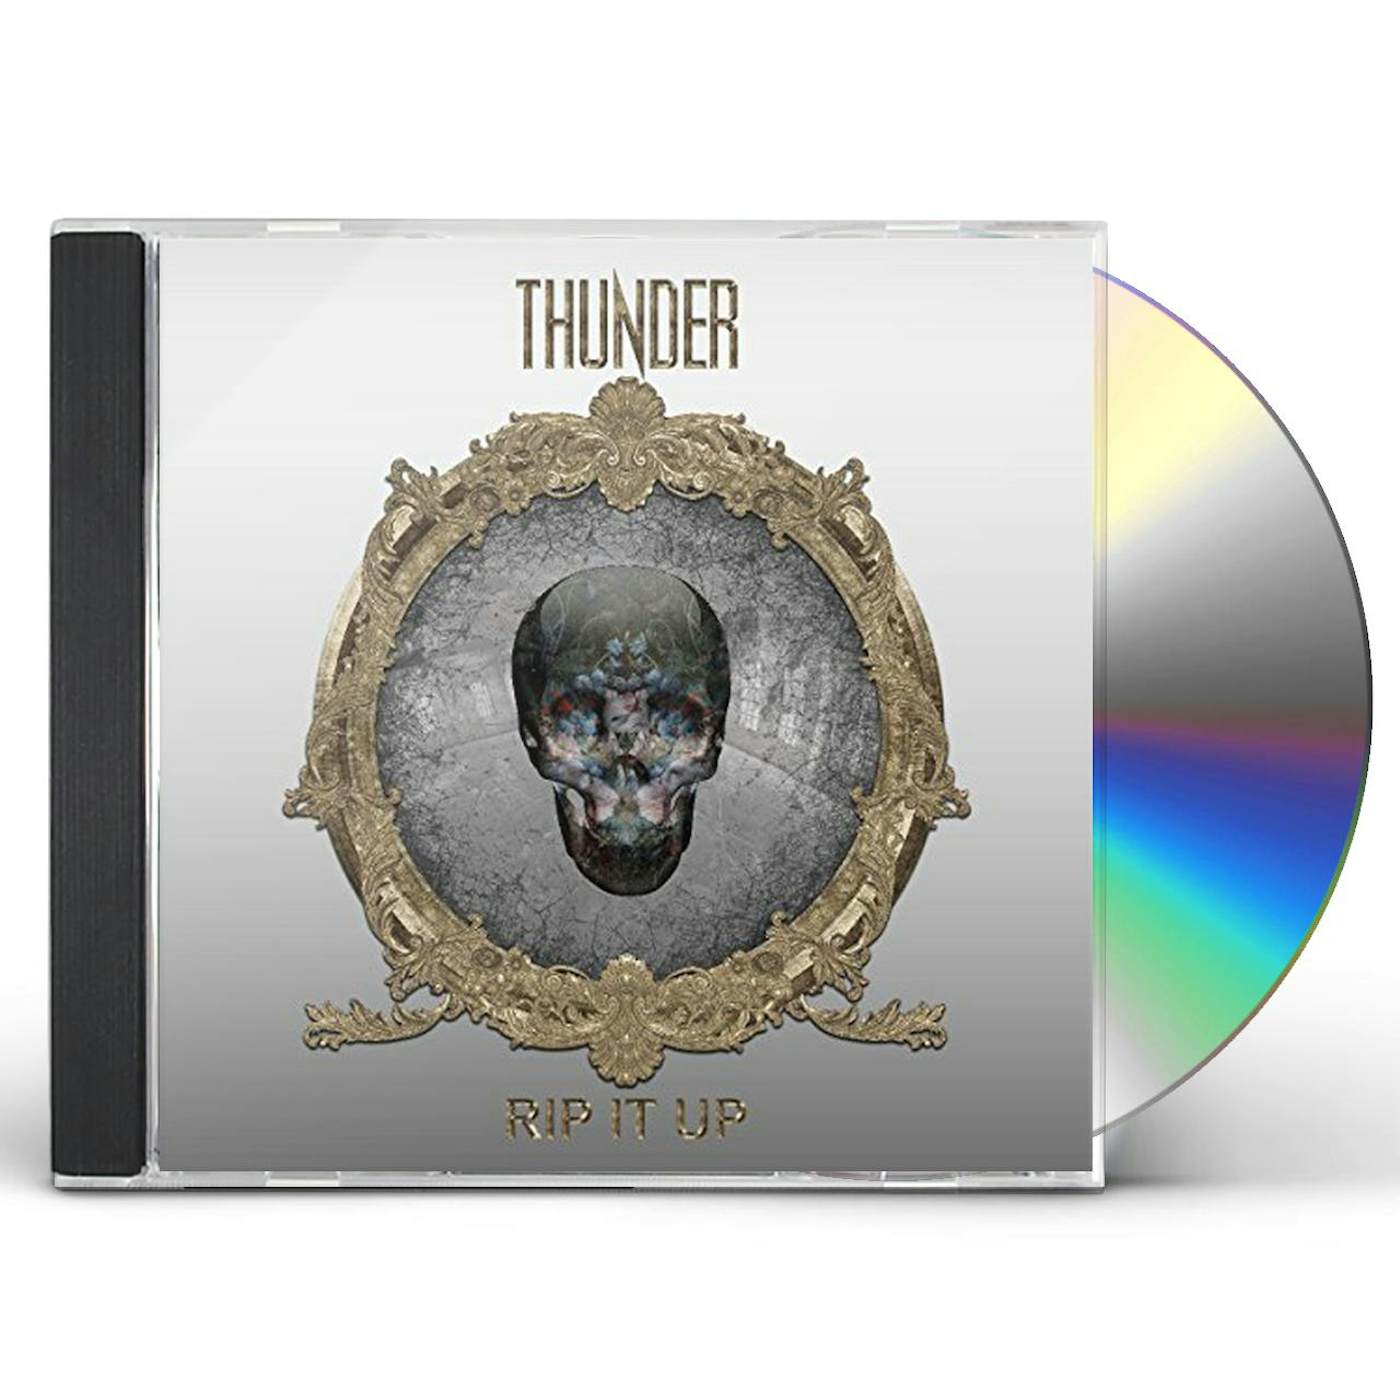 Thunder RIP IT UP CD